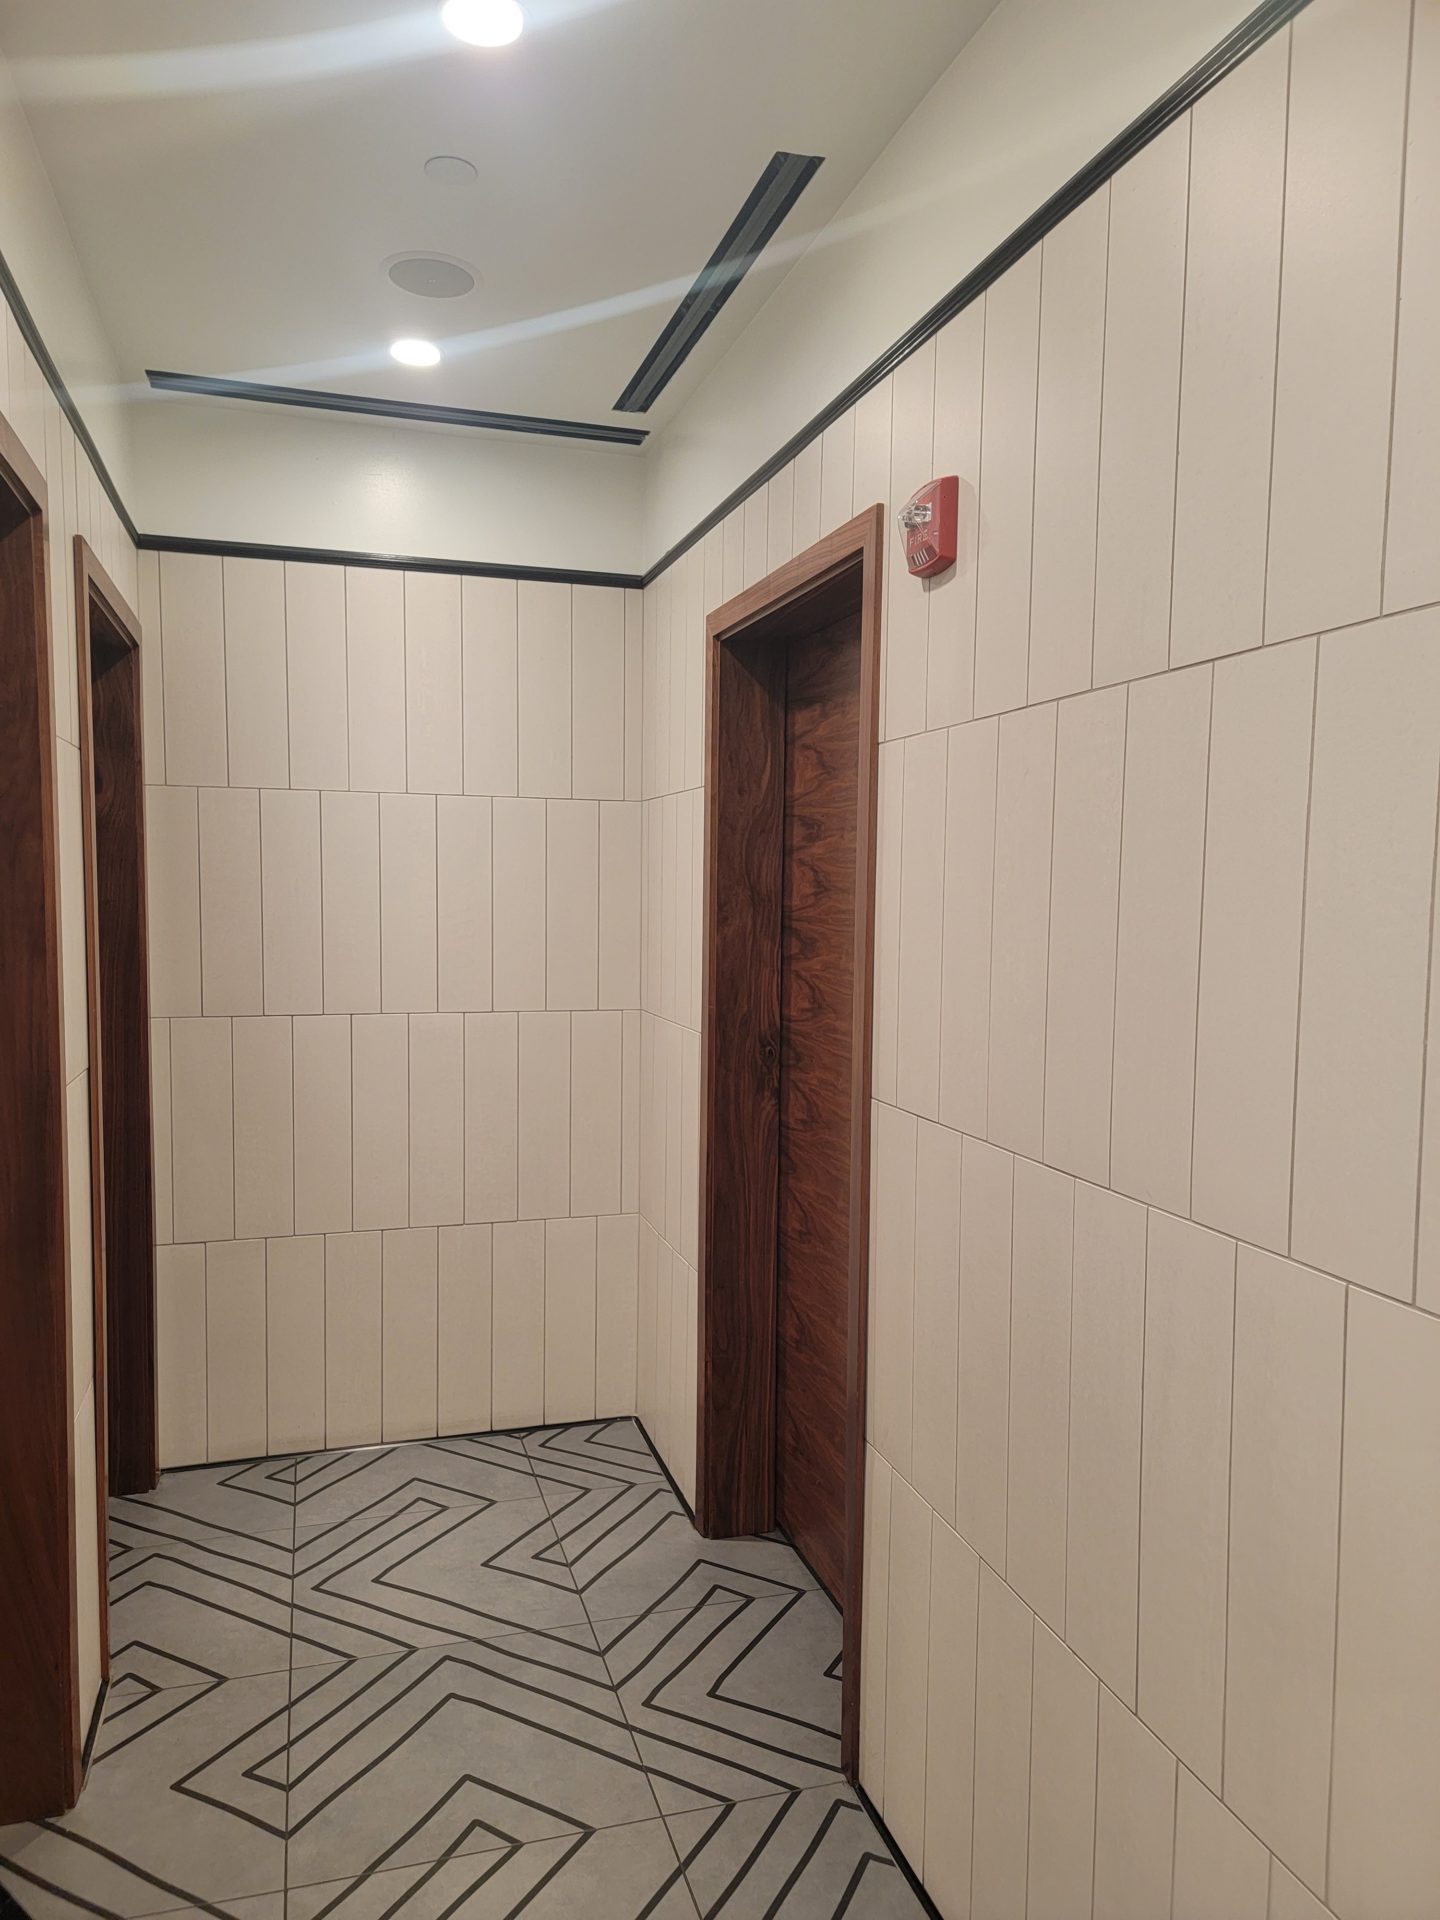 a hallway with a door and a tile floor